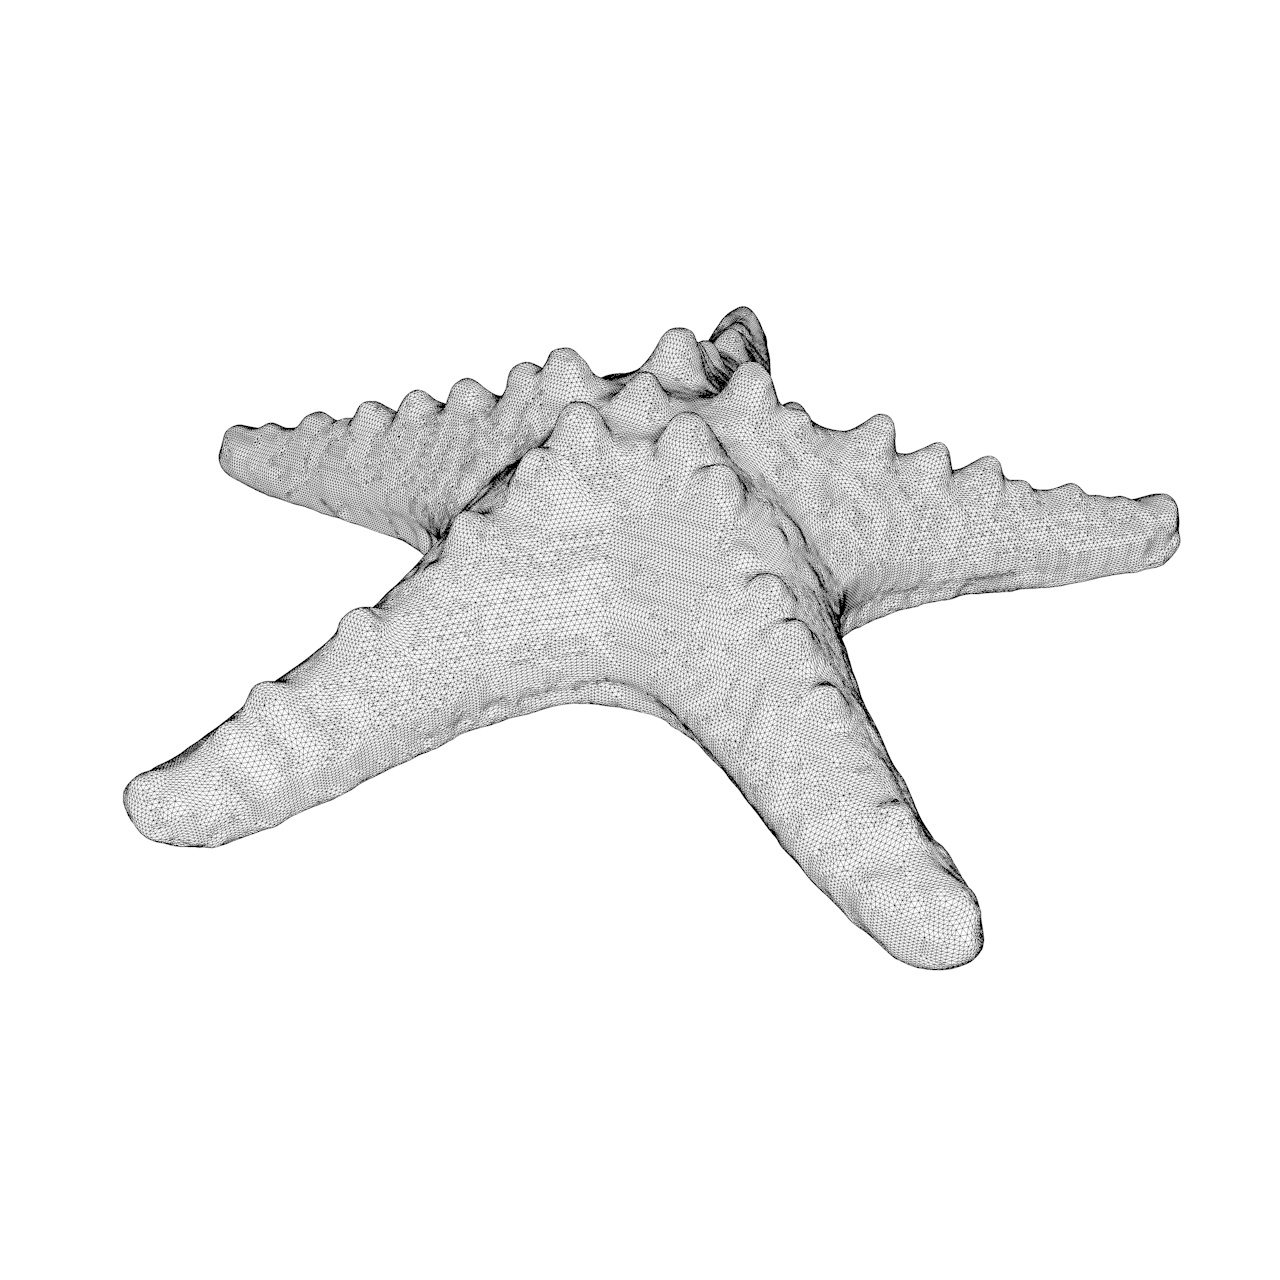 مدل چاپ سه بعدی ستاره دریایی